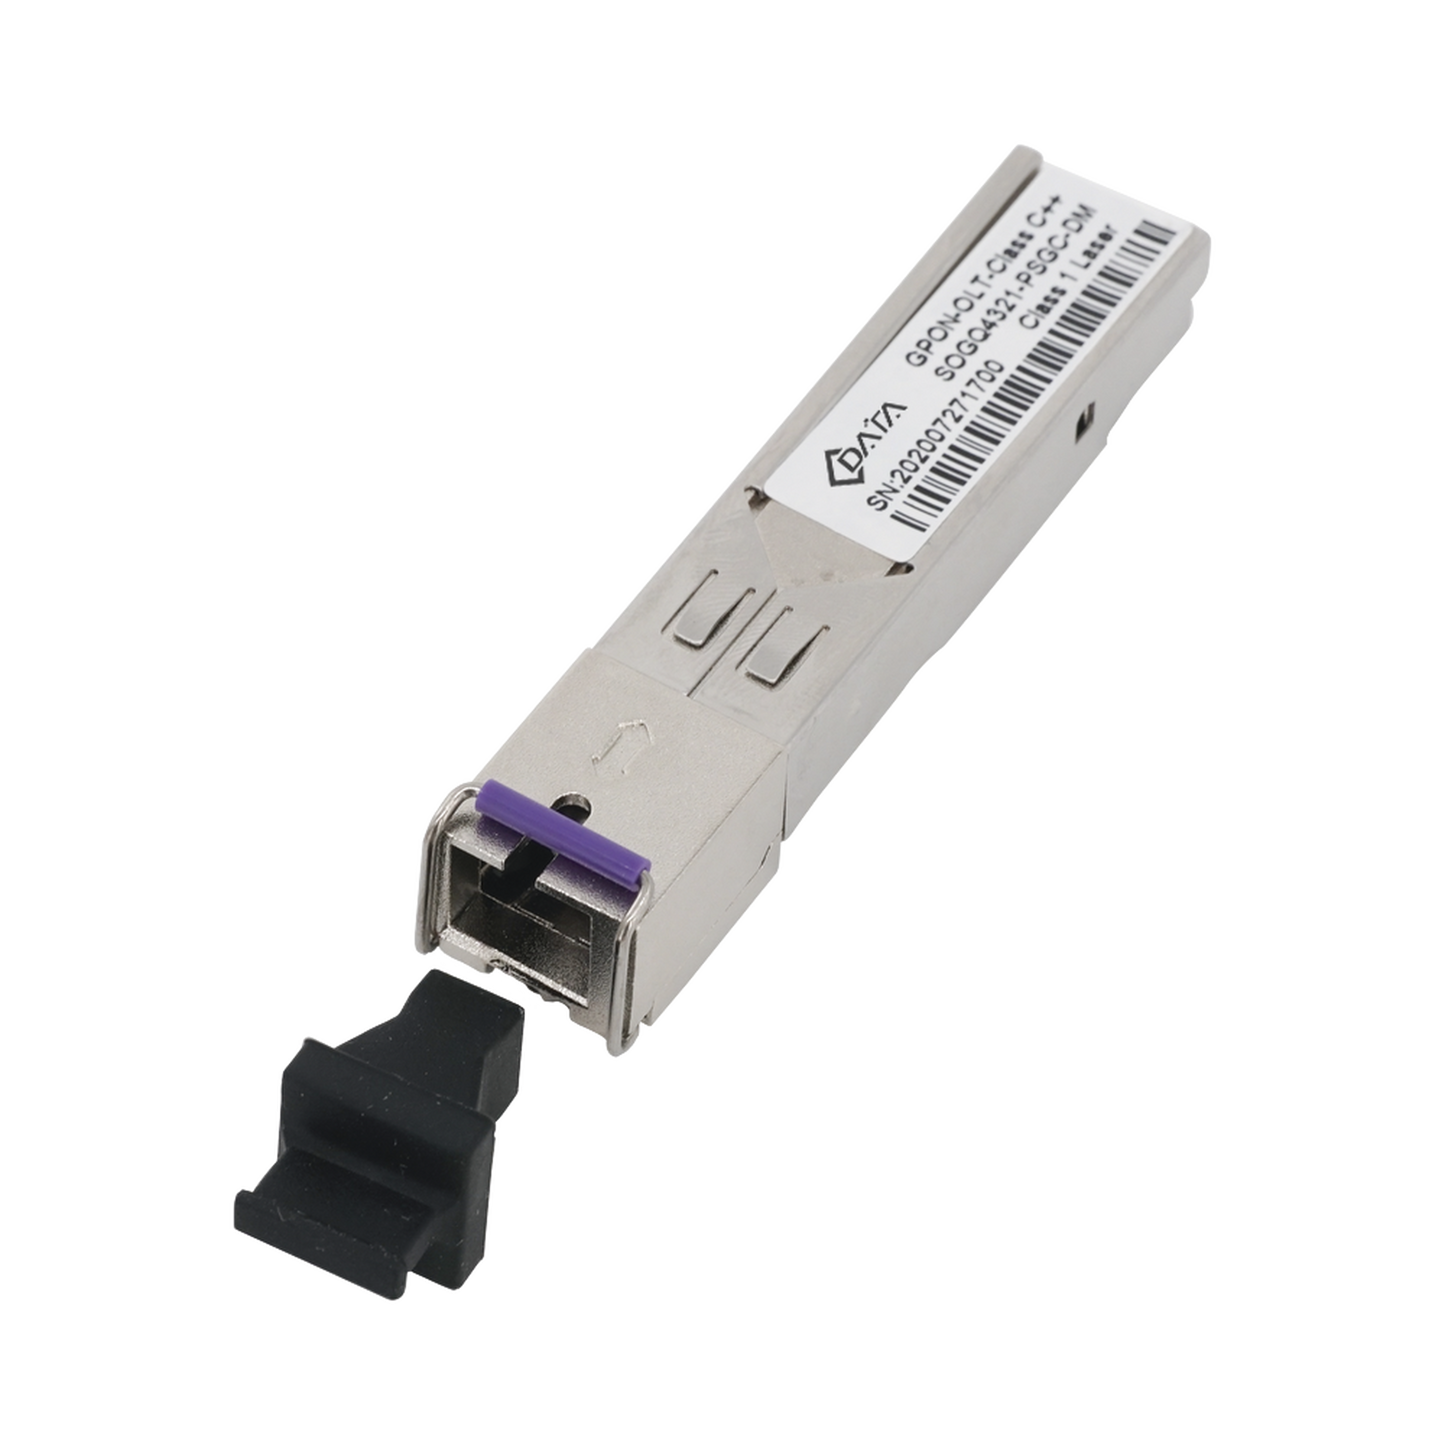 GPON OLT SFP Transceiver, SFP form-factor, SC/UPC Receptacle connector